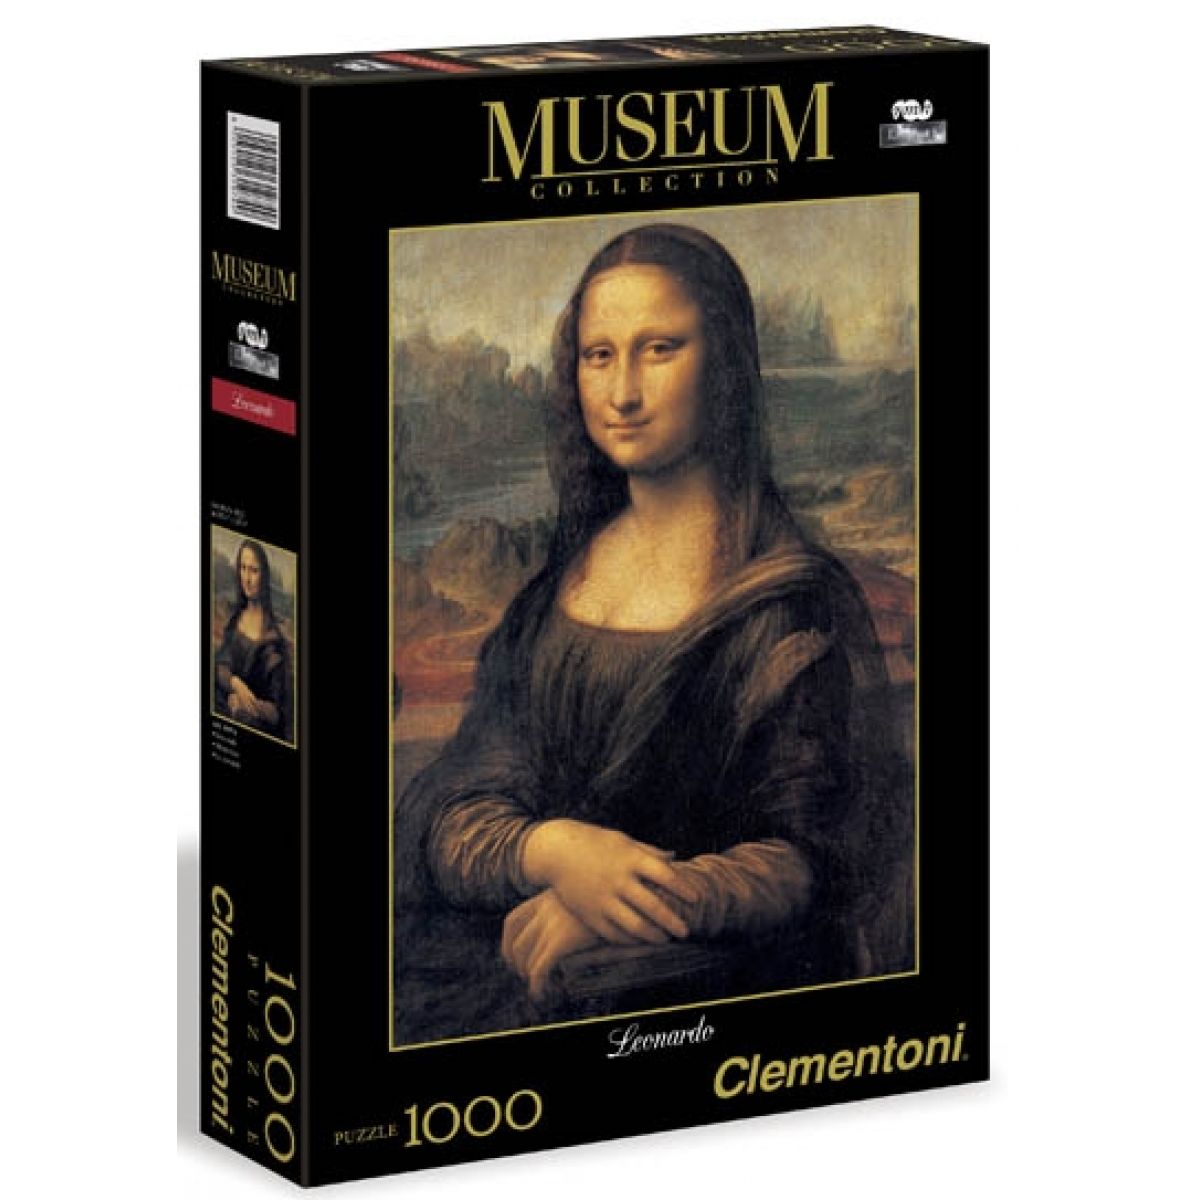 Clementoni Louvre Leonardo 1000 pieces